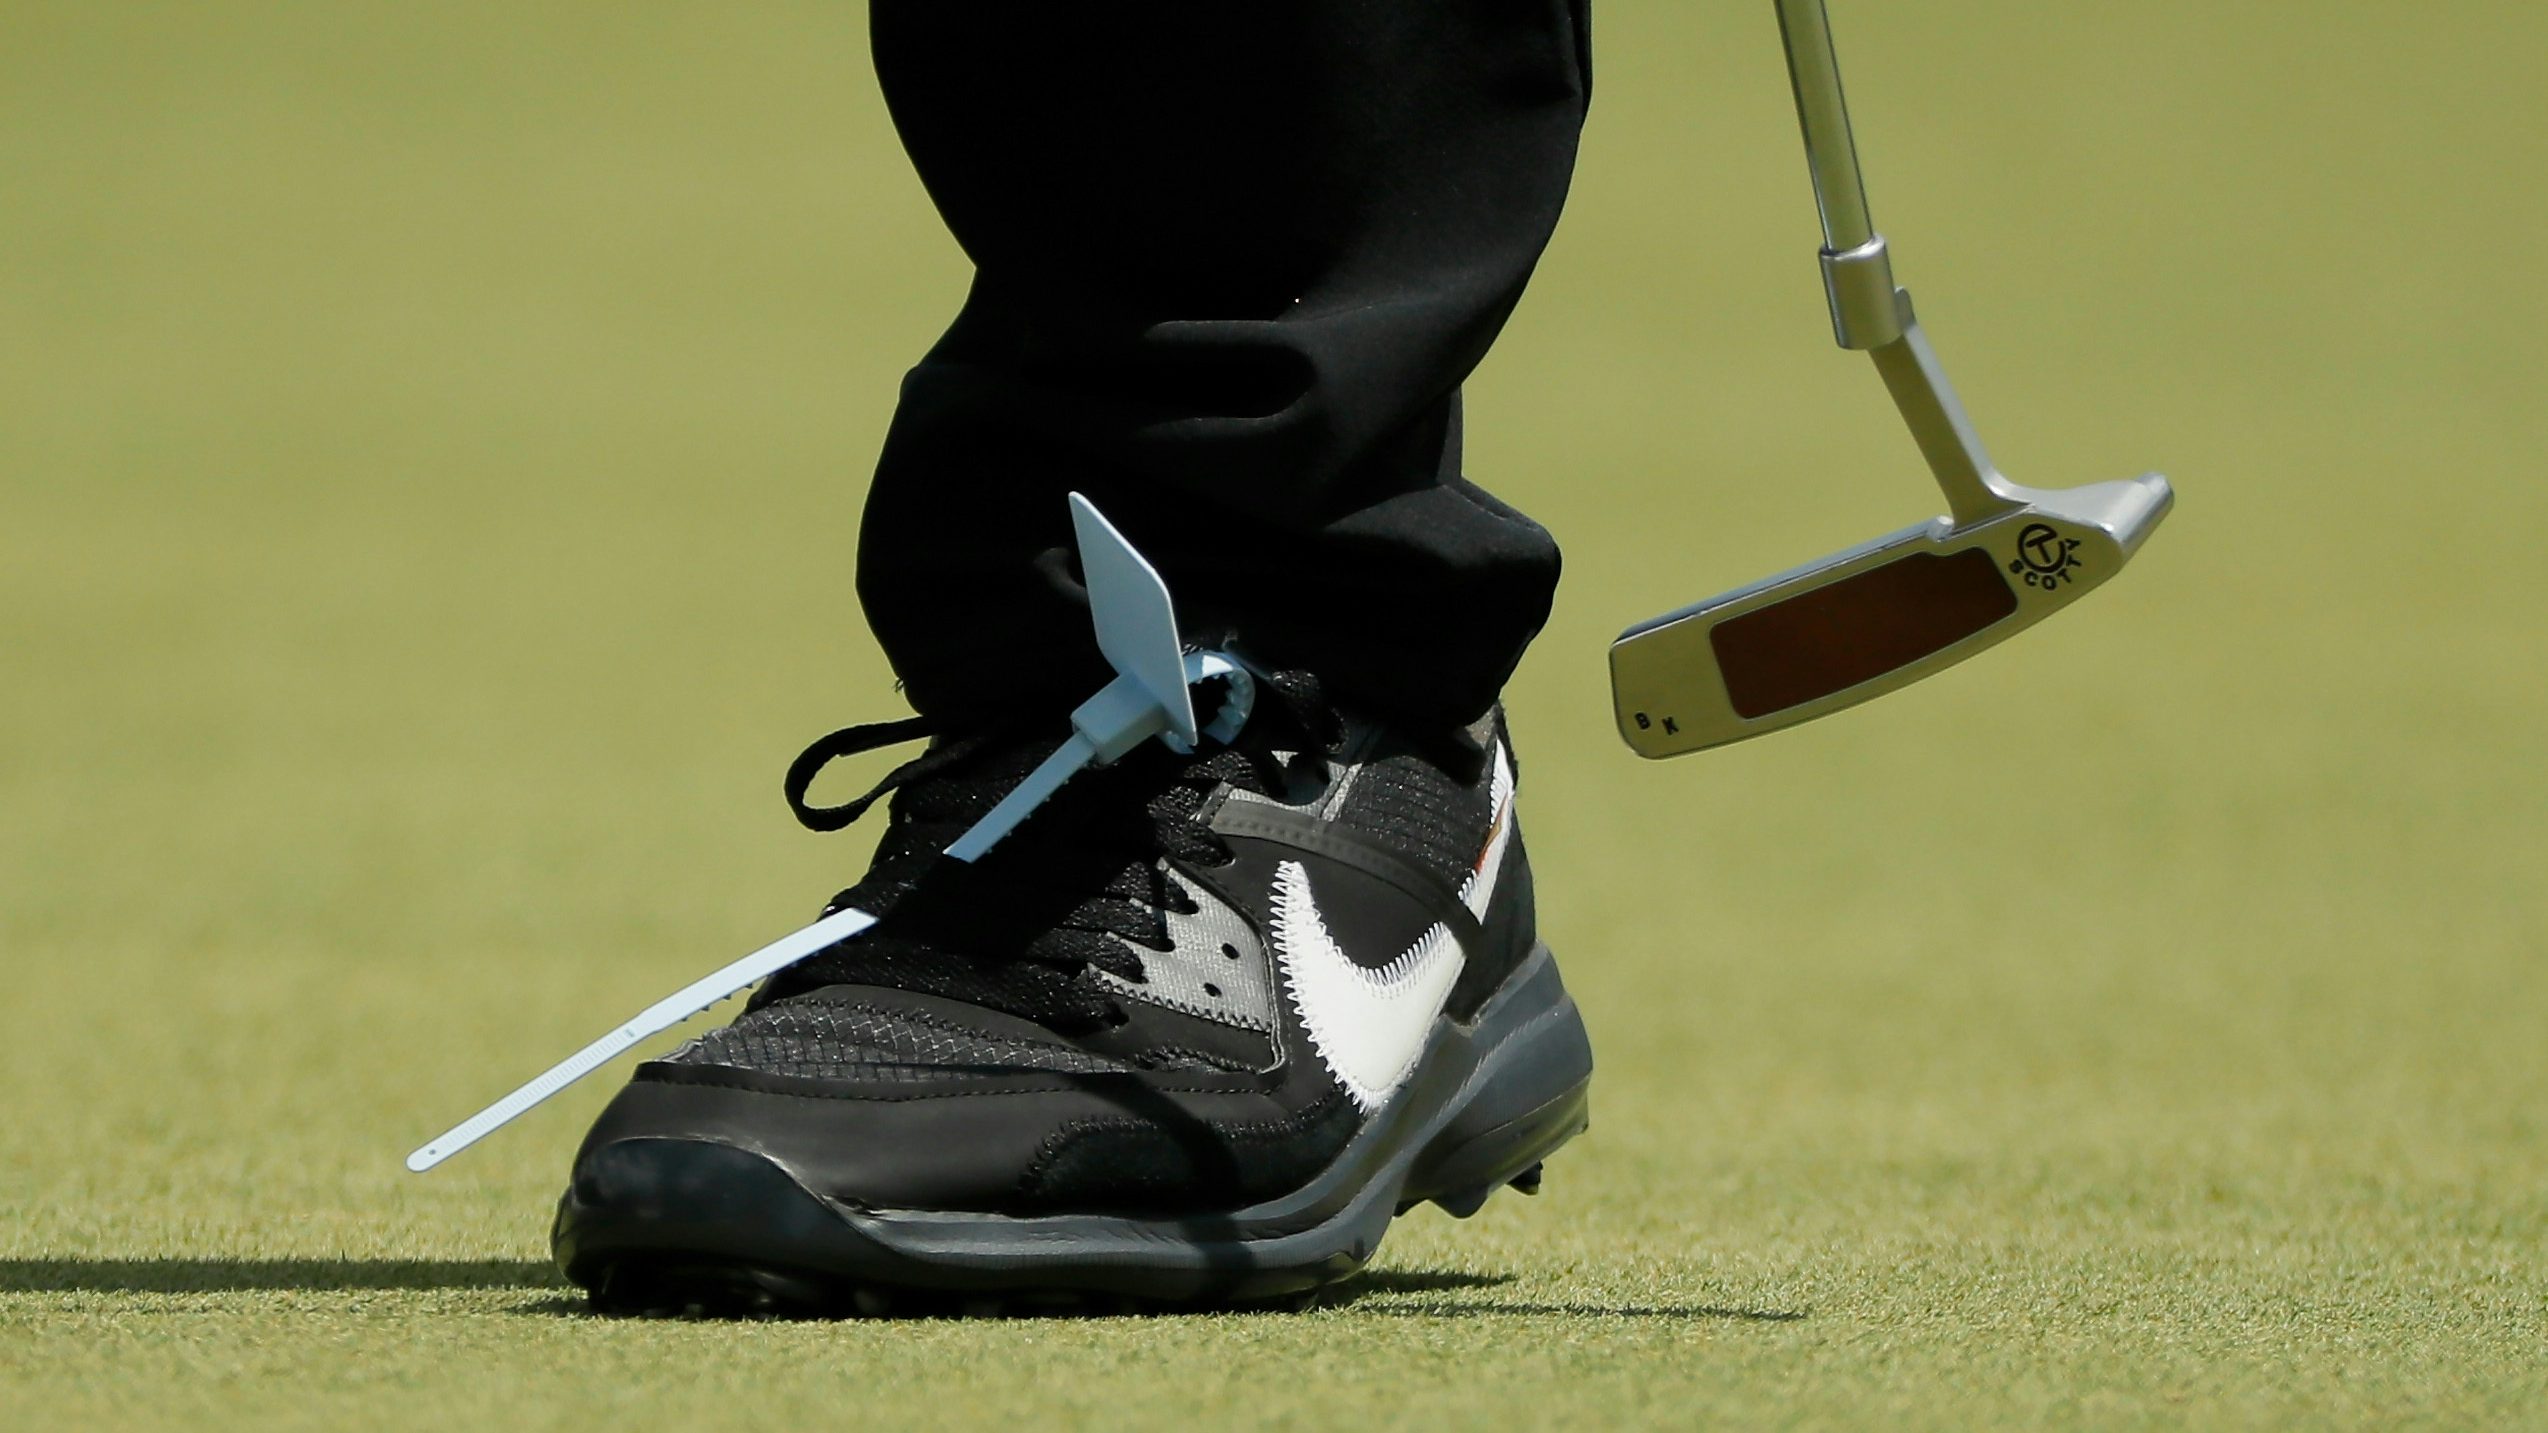 Brooks Koepka wears Off-White Nikes at 2019 PGA Tour Championship. Courtesy Getty Images.